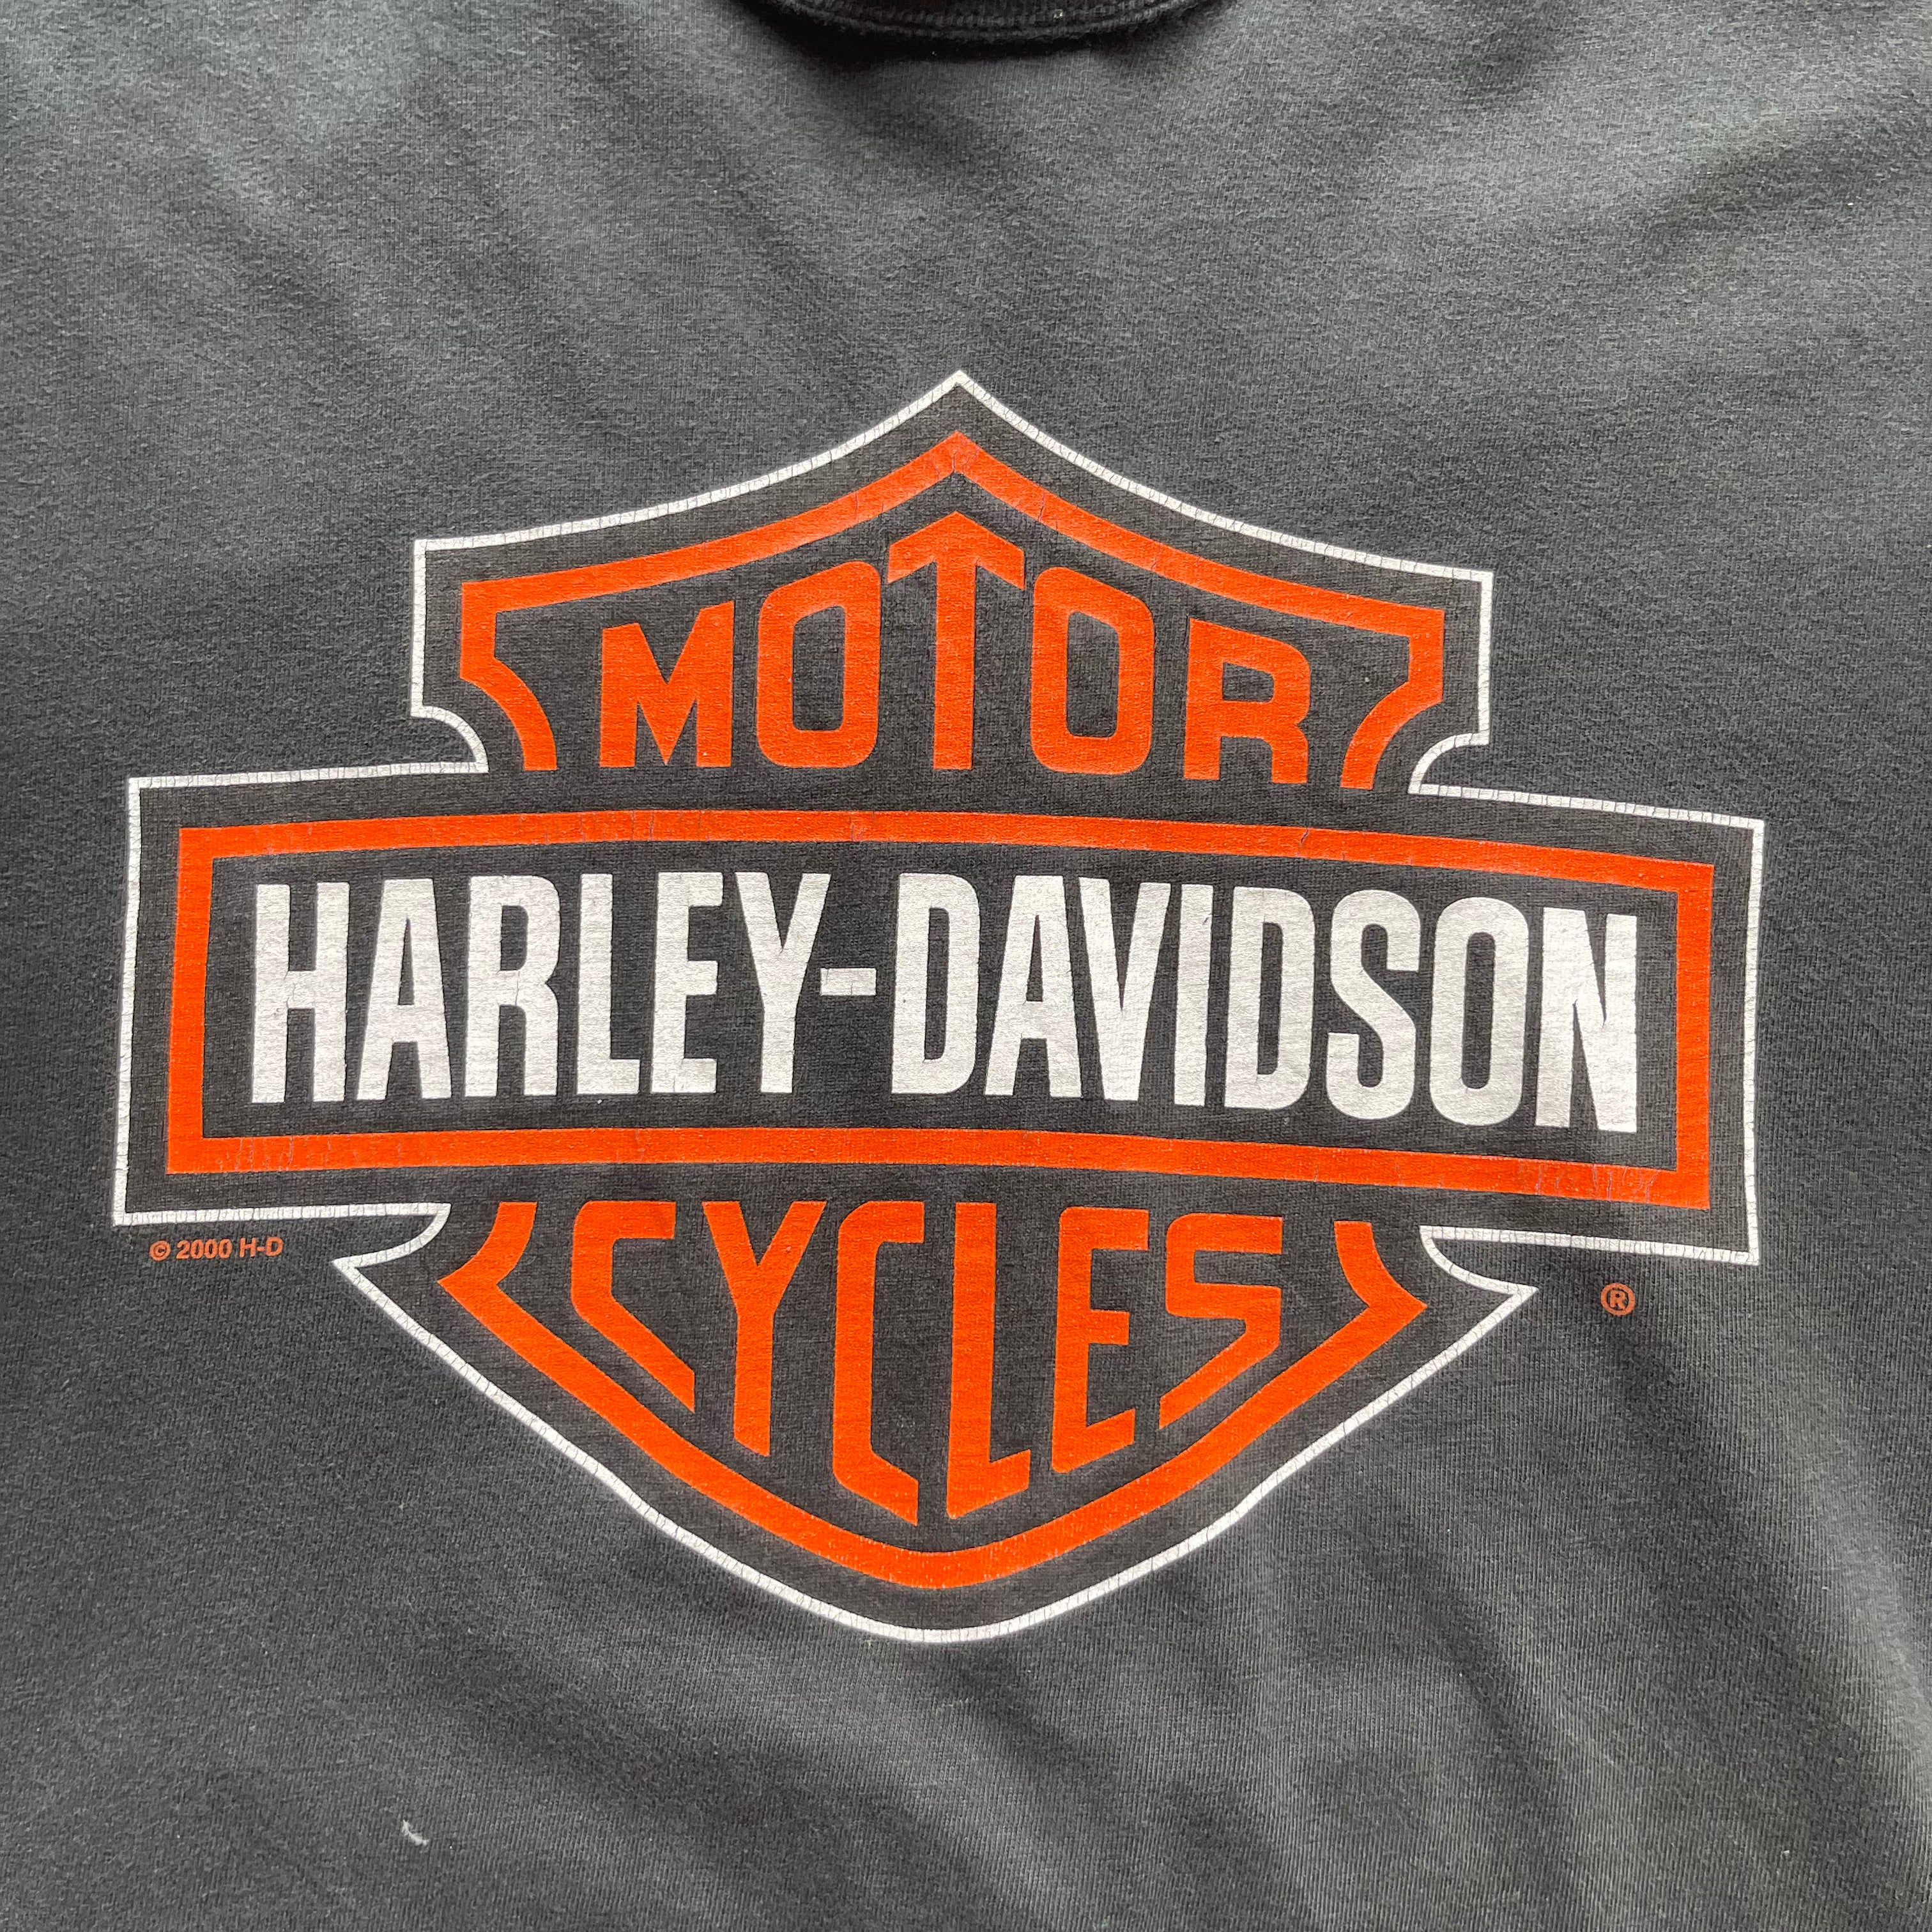 Harley Davidson Denver Colorado 2000 Made in USA